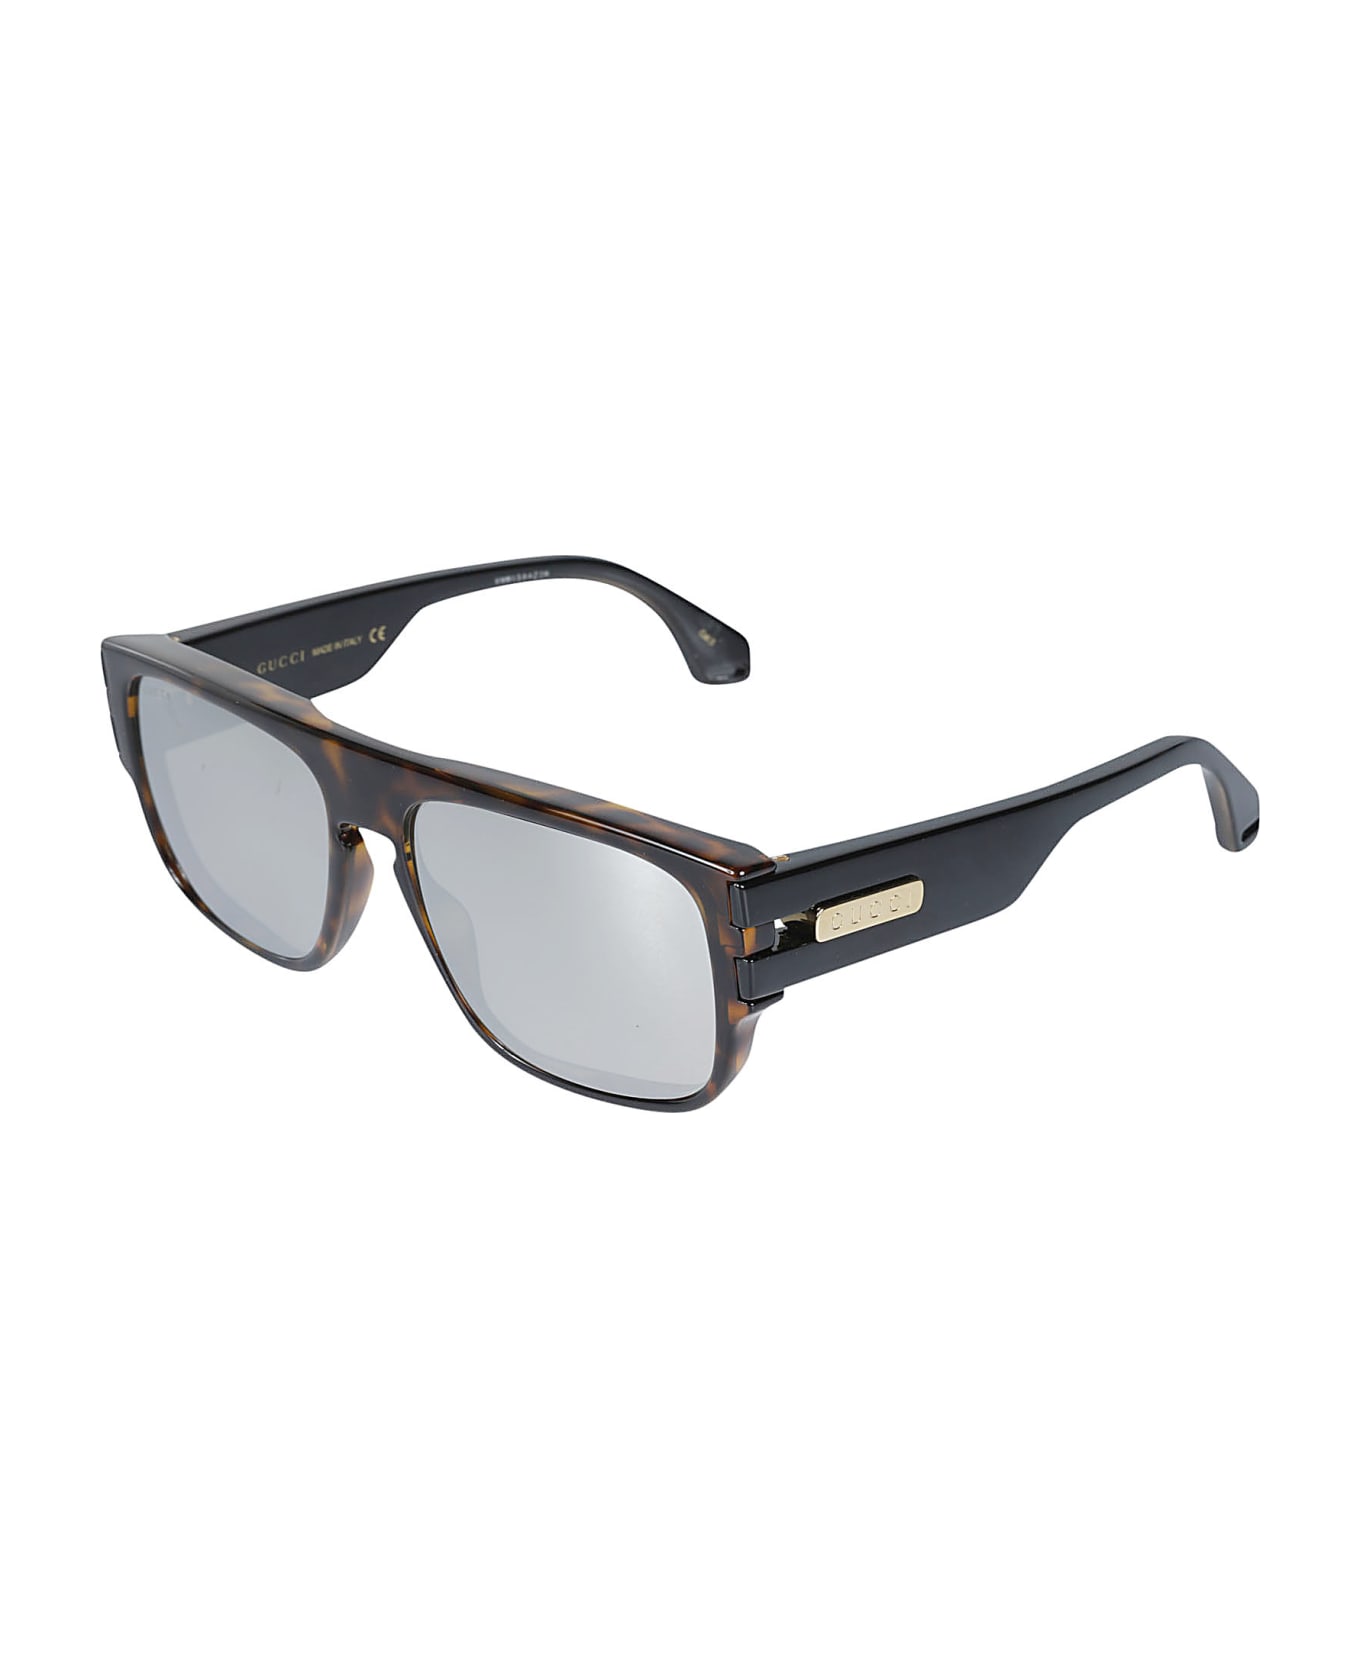 Gucci Eyewear Rectangle Retro Sunglasses - 004 havana black silver